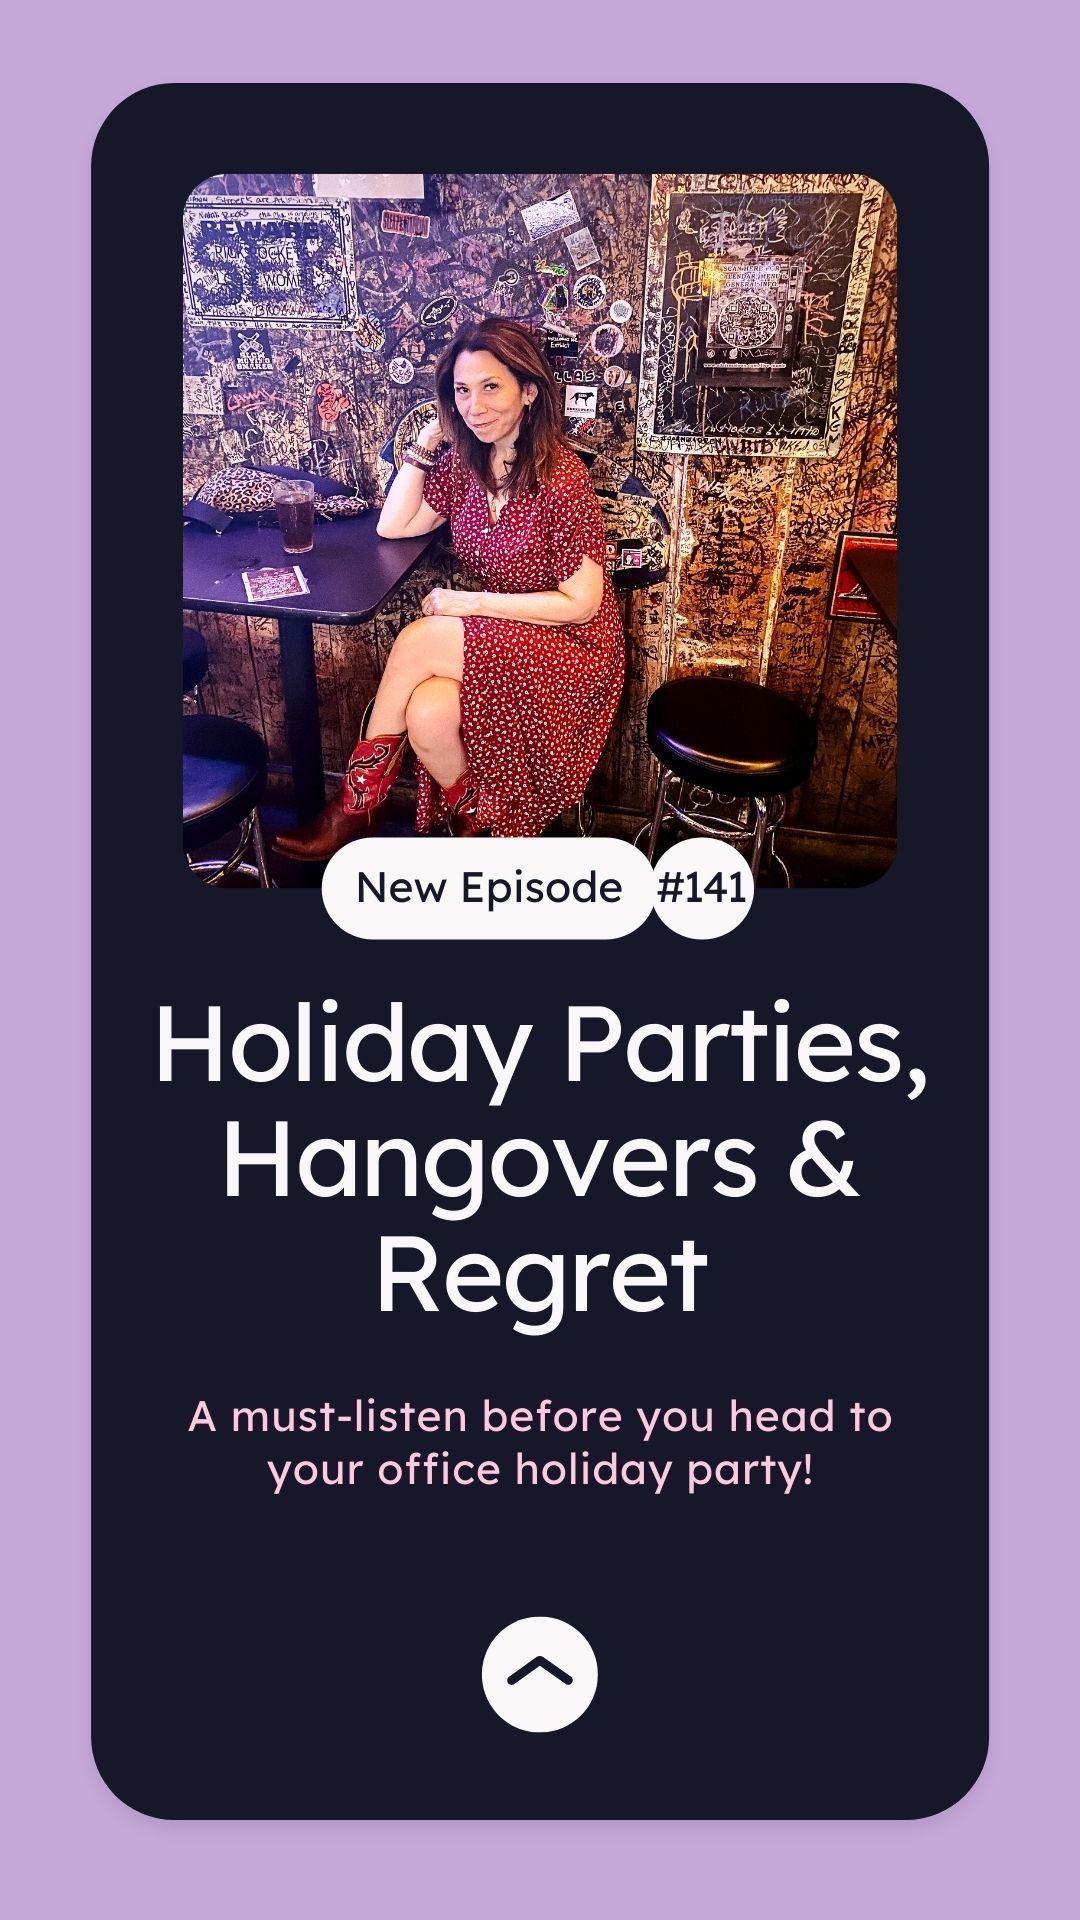 Episode #141: Holiday Parties, Hangovers & Regret